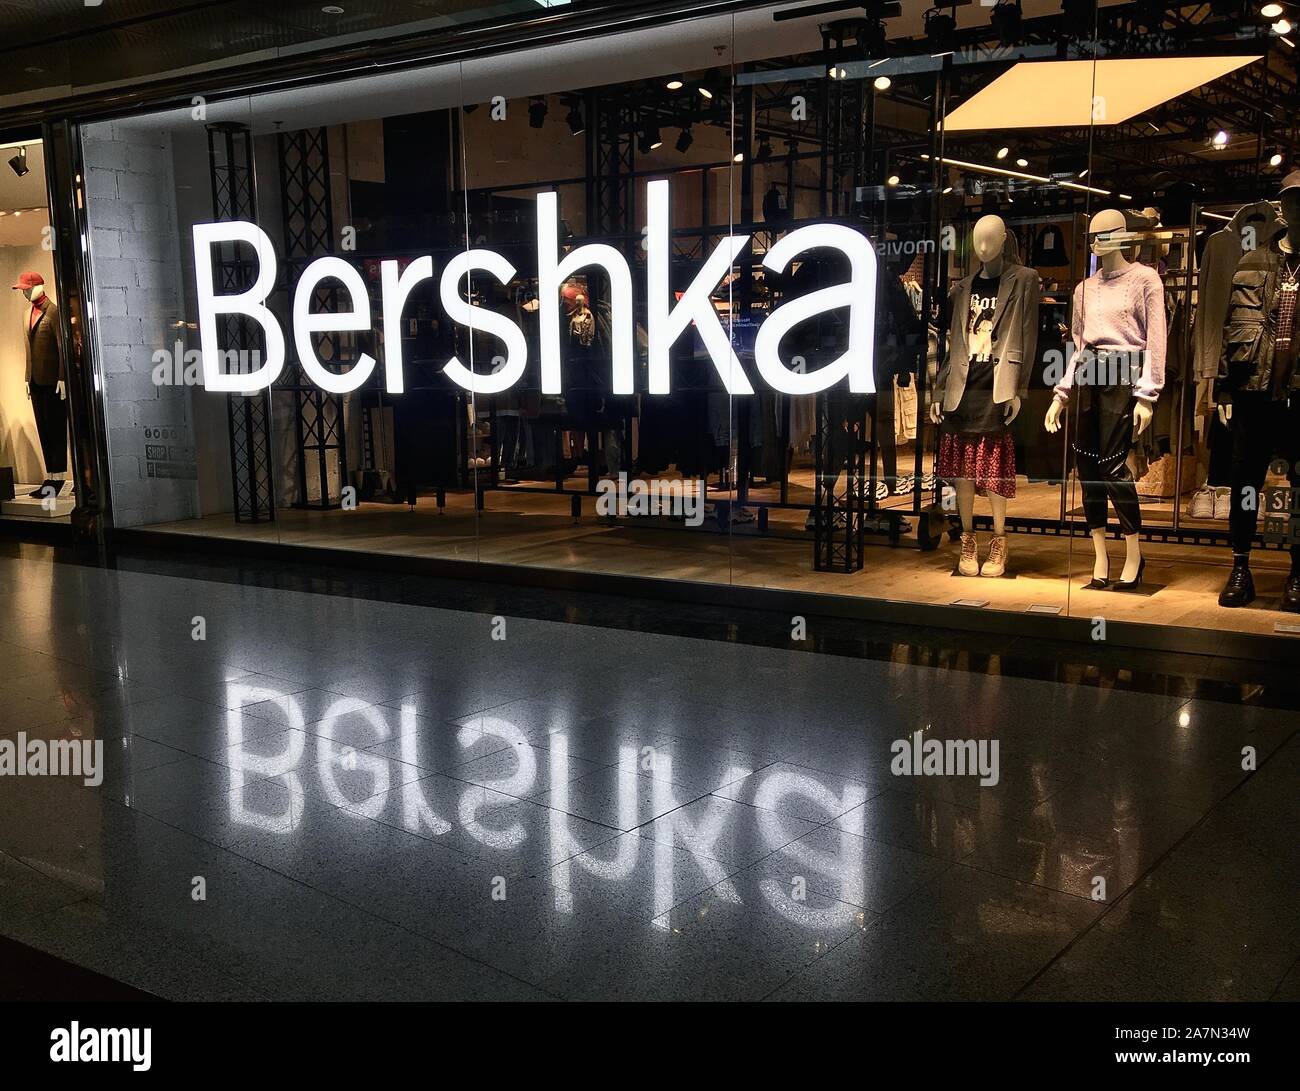 Bershka stock photography images - Alamy